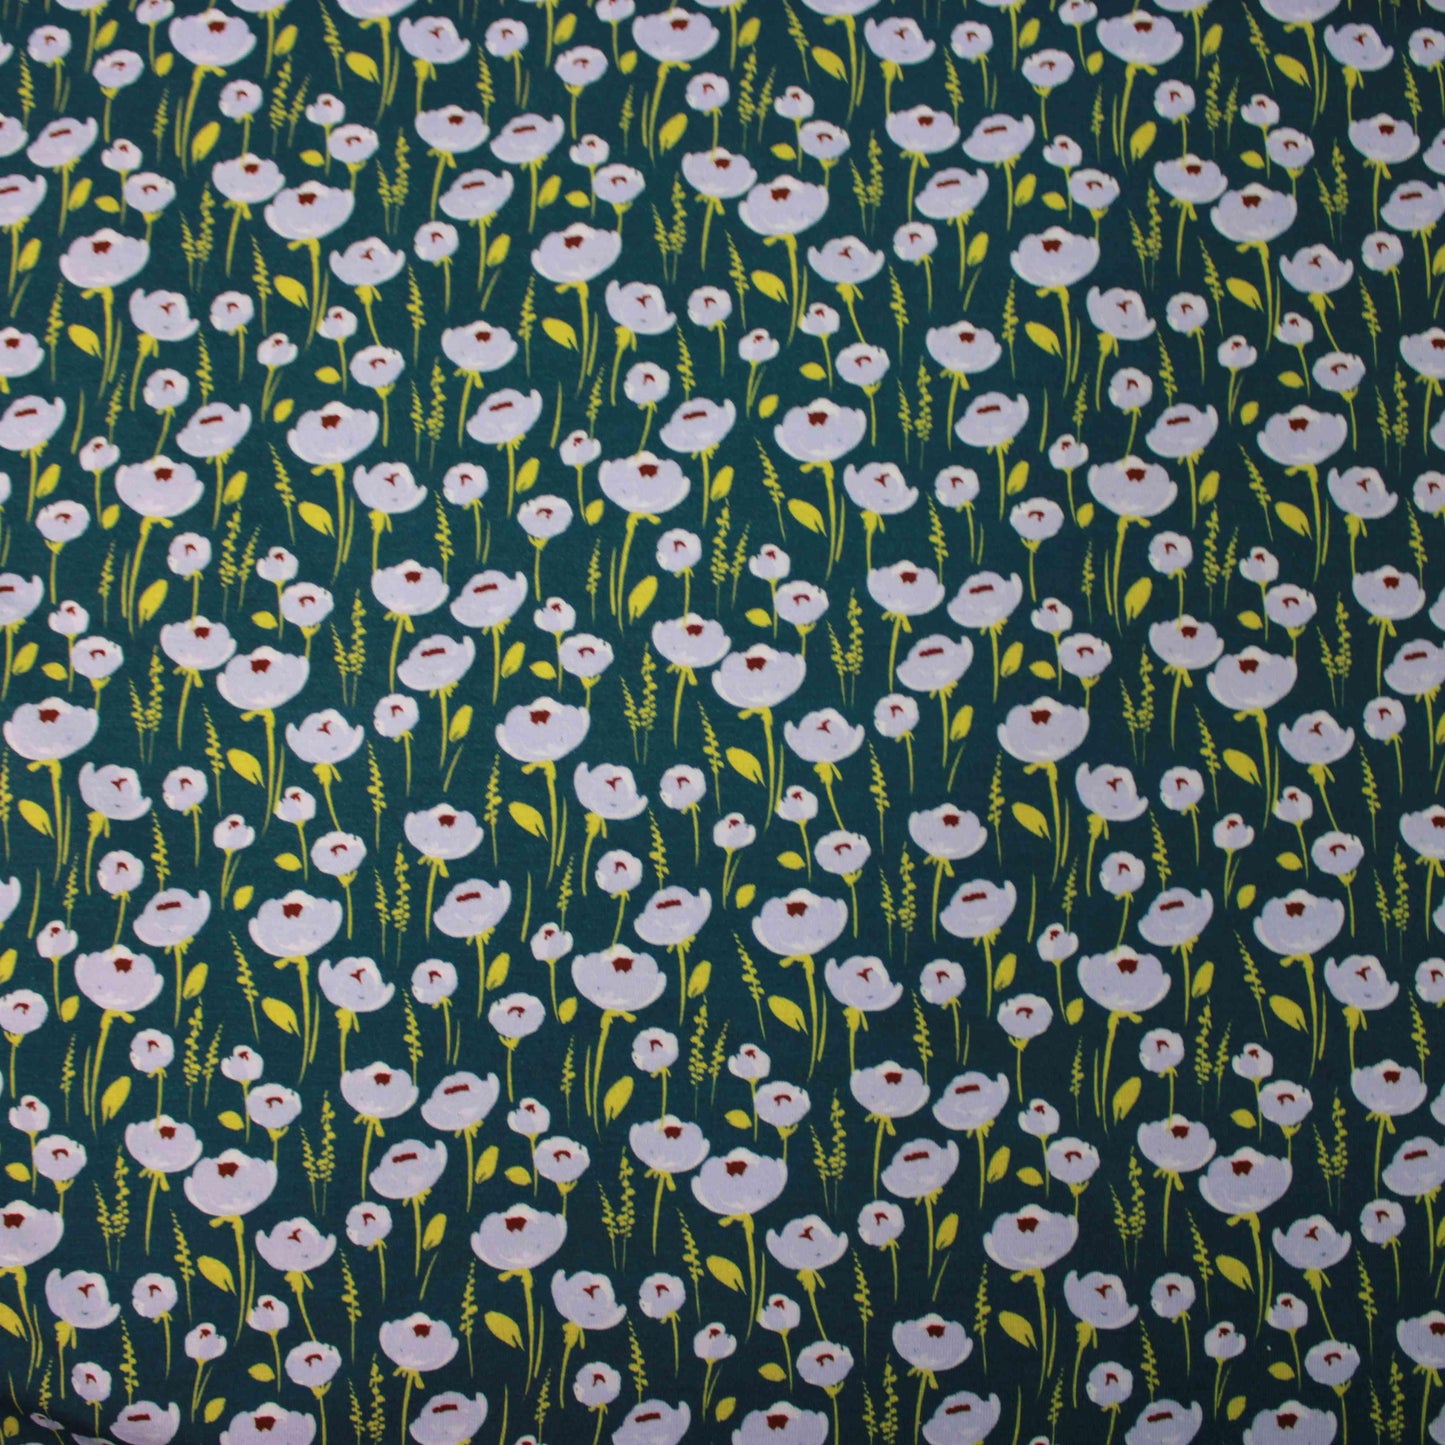 Blue Poppies on Bamboo/Spandex Jersey Fabric - Nature's Fabrics